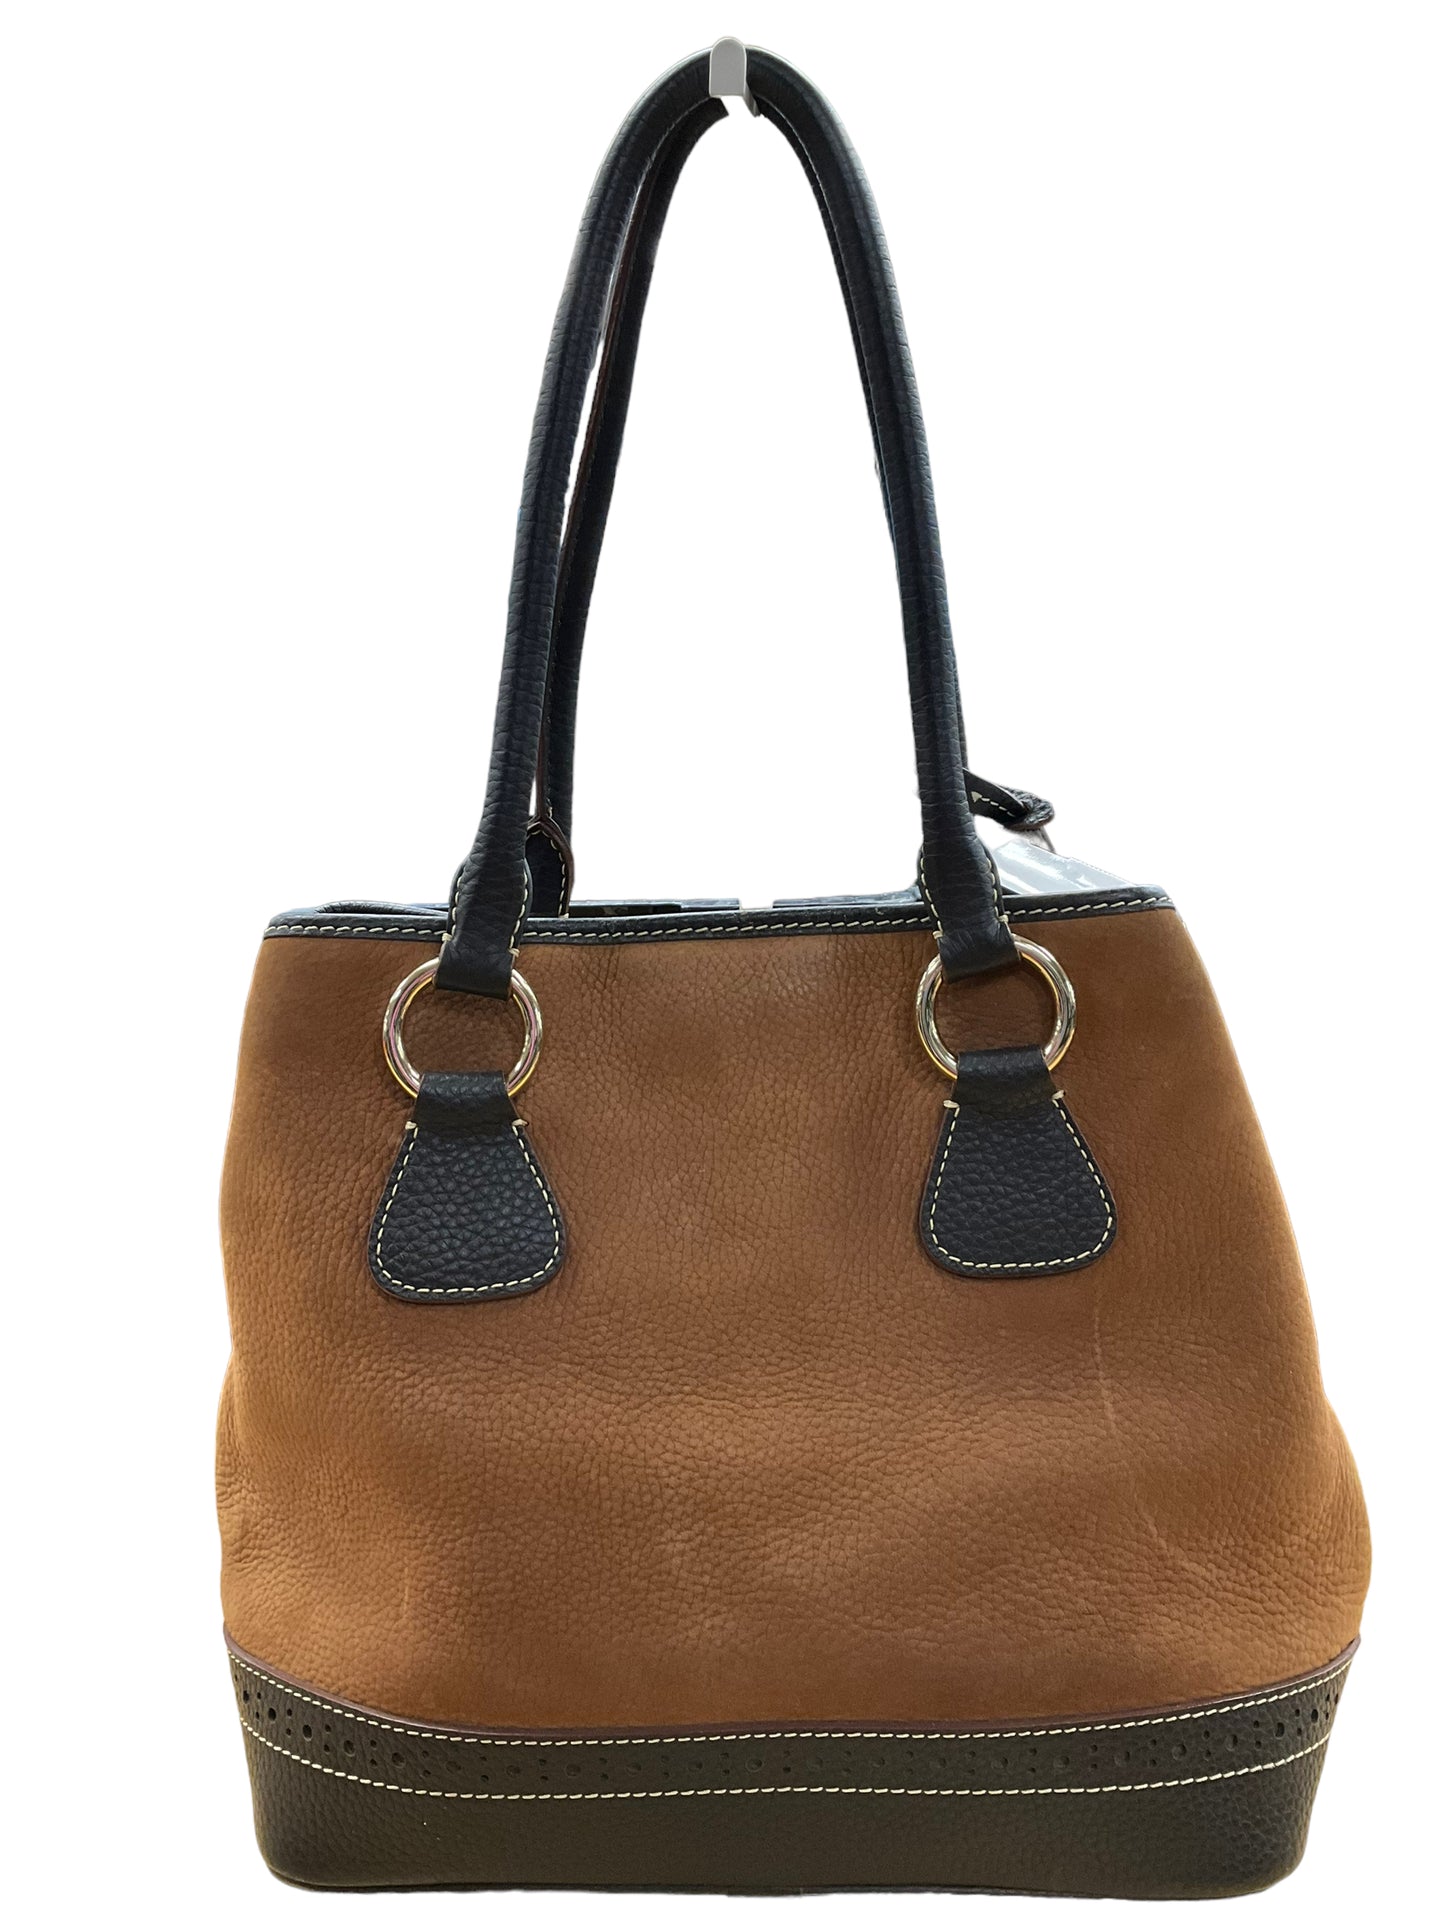 Handbag Designer By Dooney And Bourke O  Size: Medium